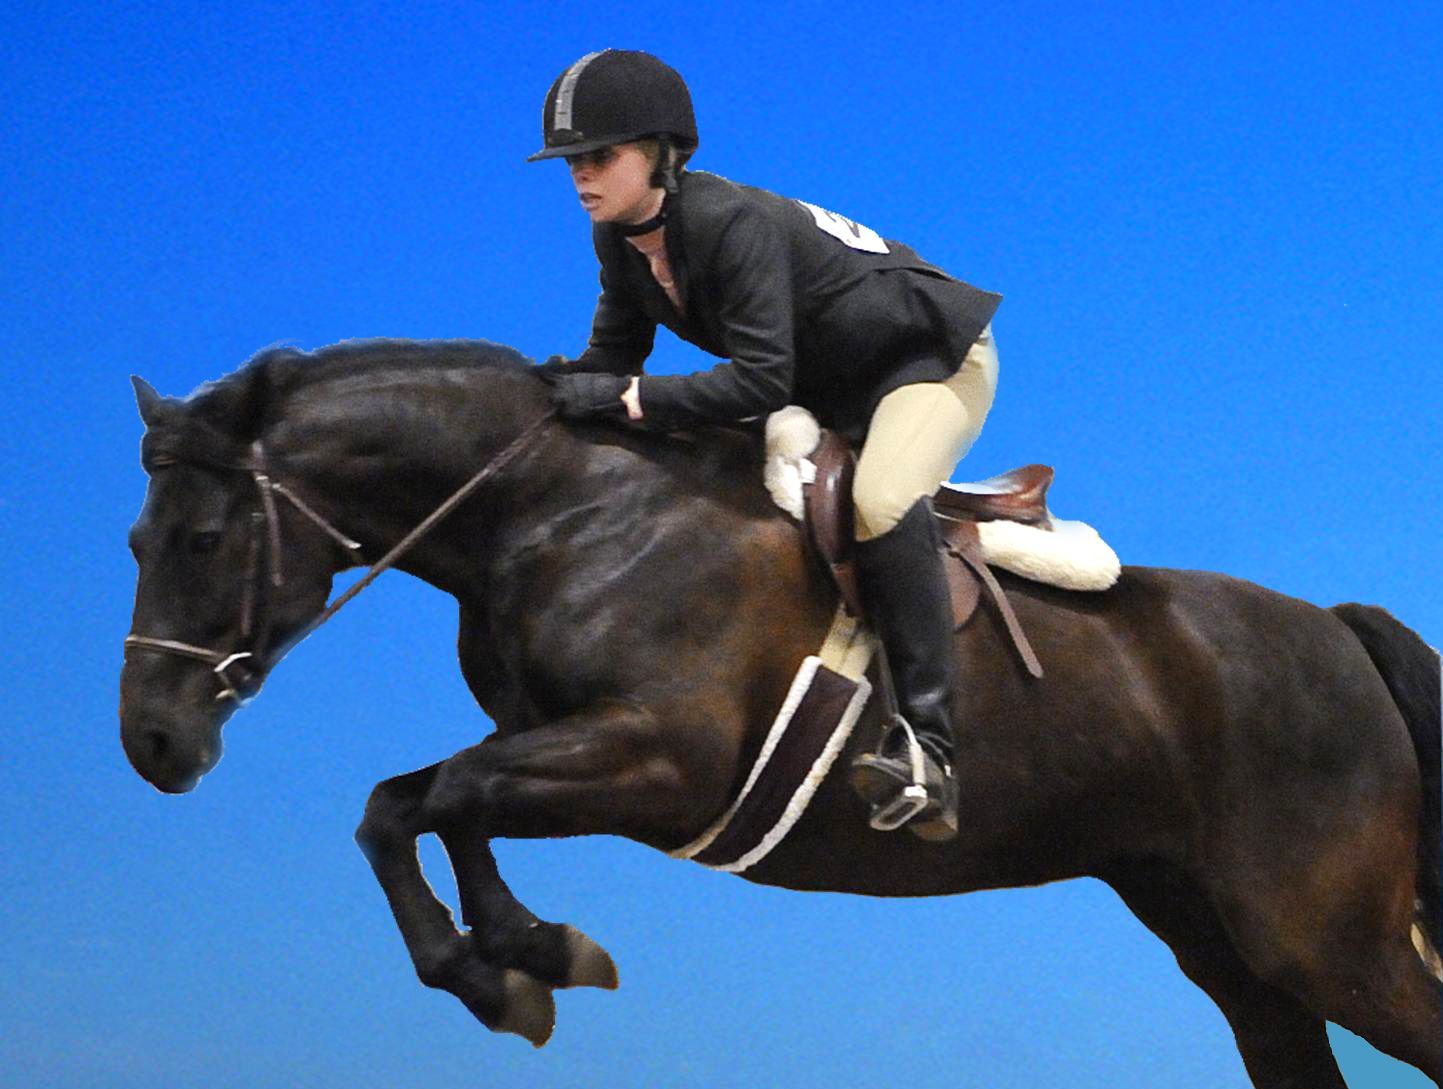 HD Animals Wallpaper: Beautiful Black Horse Picture. Horse picture, Horses, Black horse